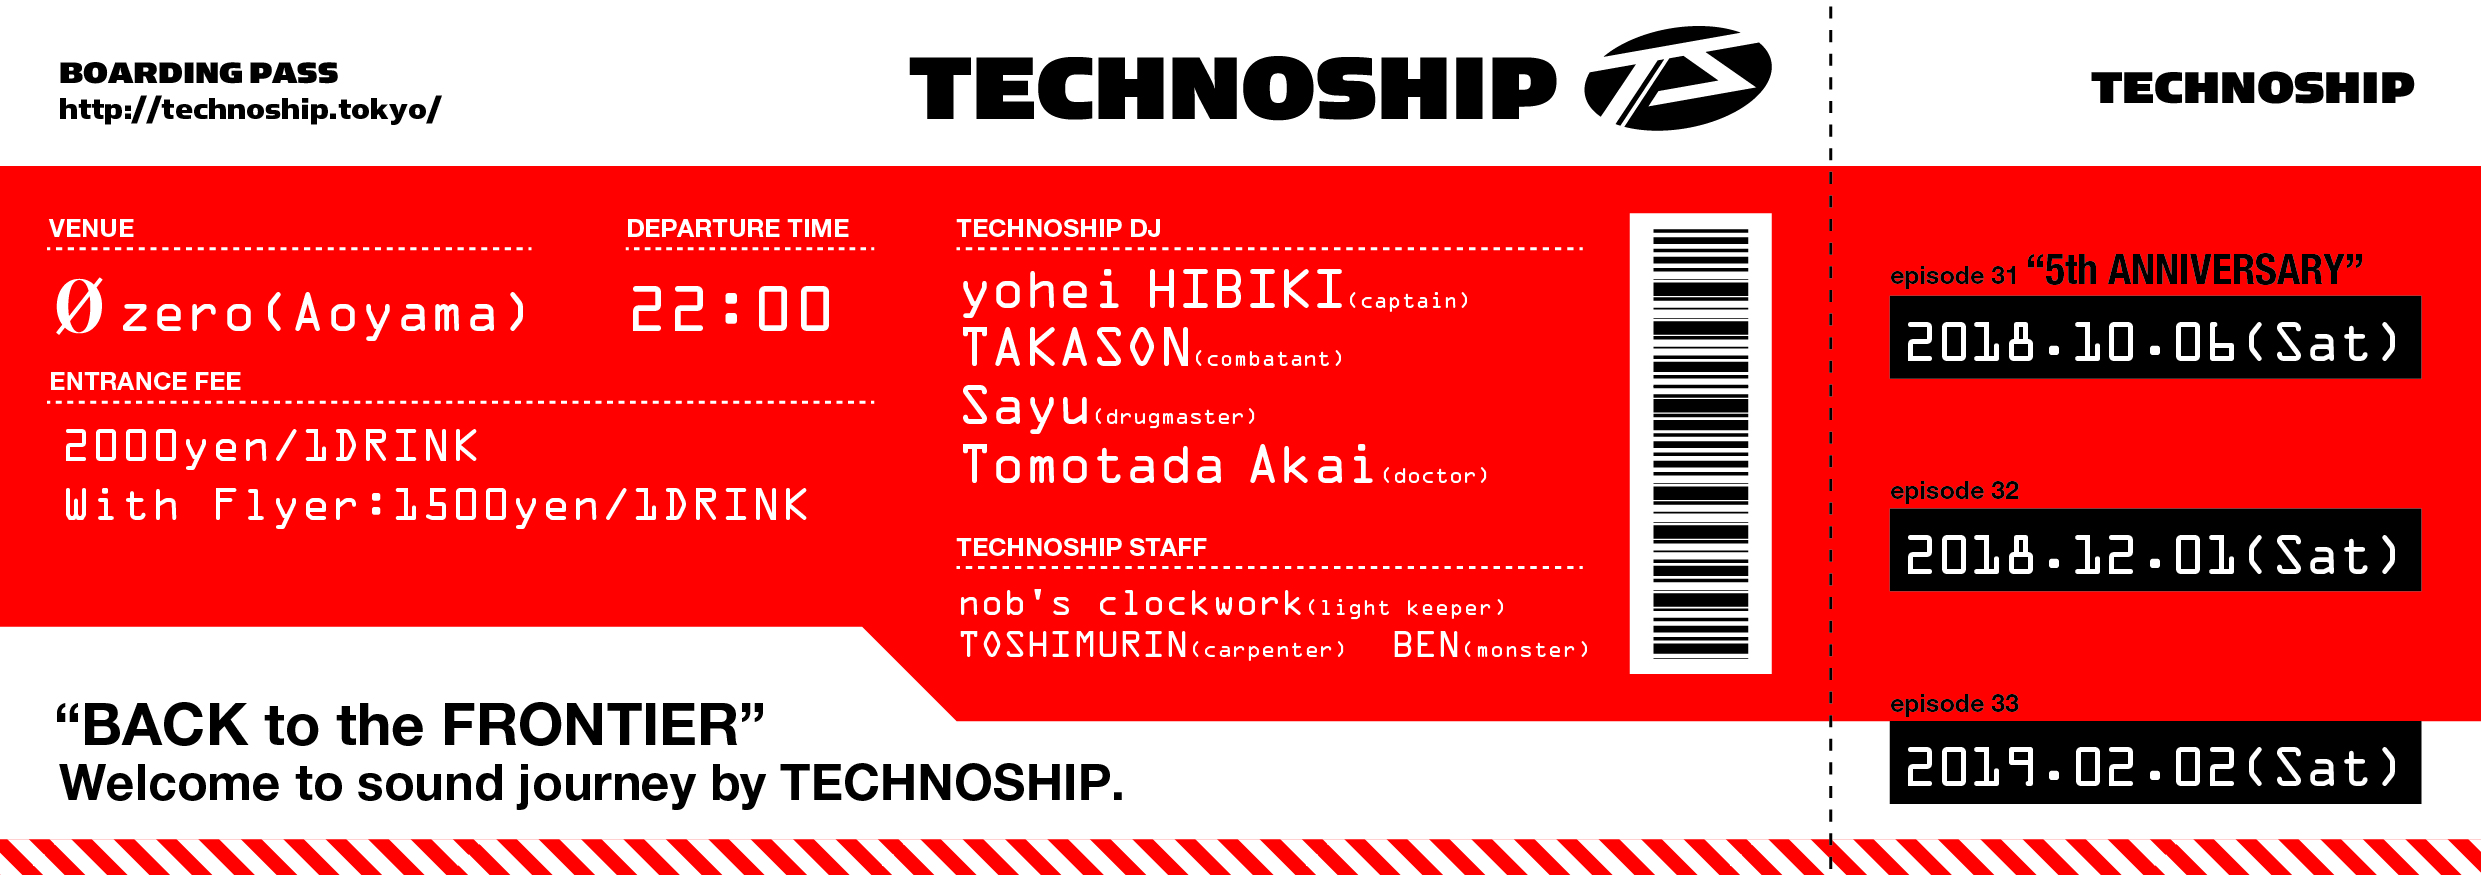 TECHNOSHIP　episode31 “5th Anniversary” guest live HIROSHI WATANABE aka KAITO (Transmat / Kompakt)